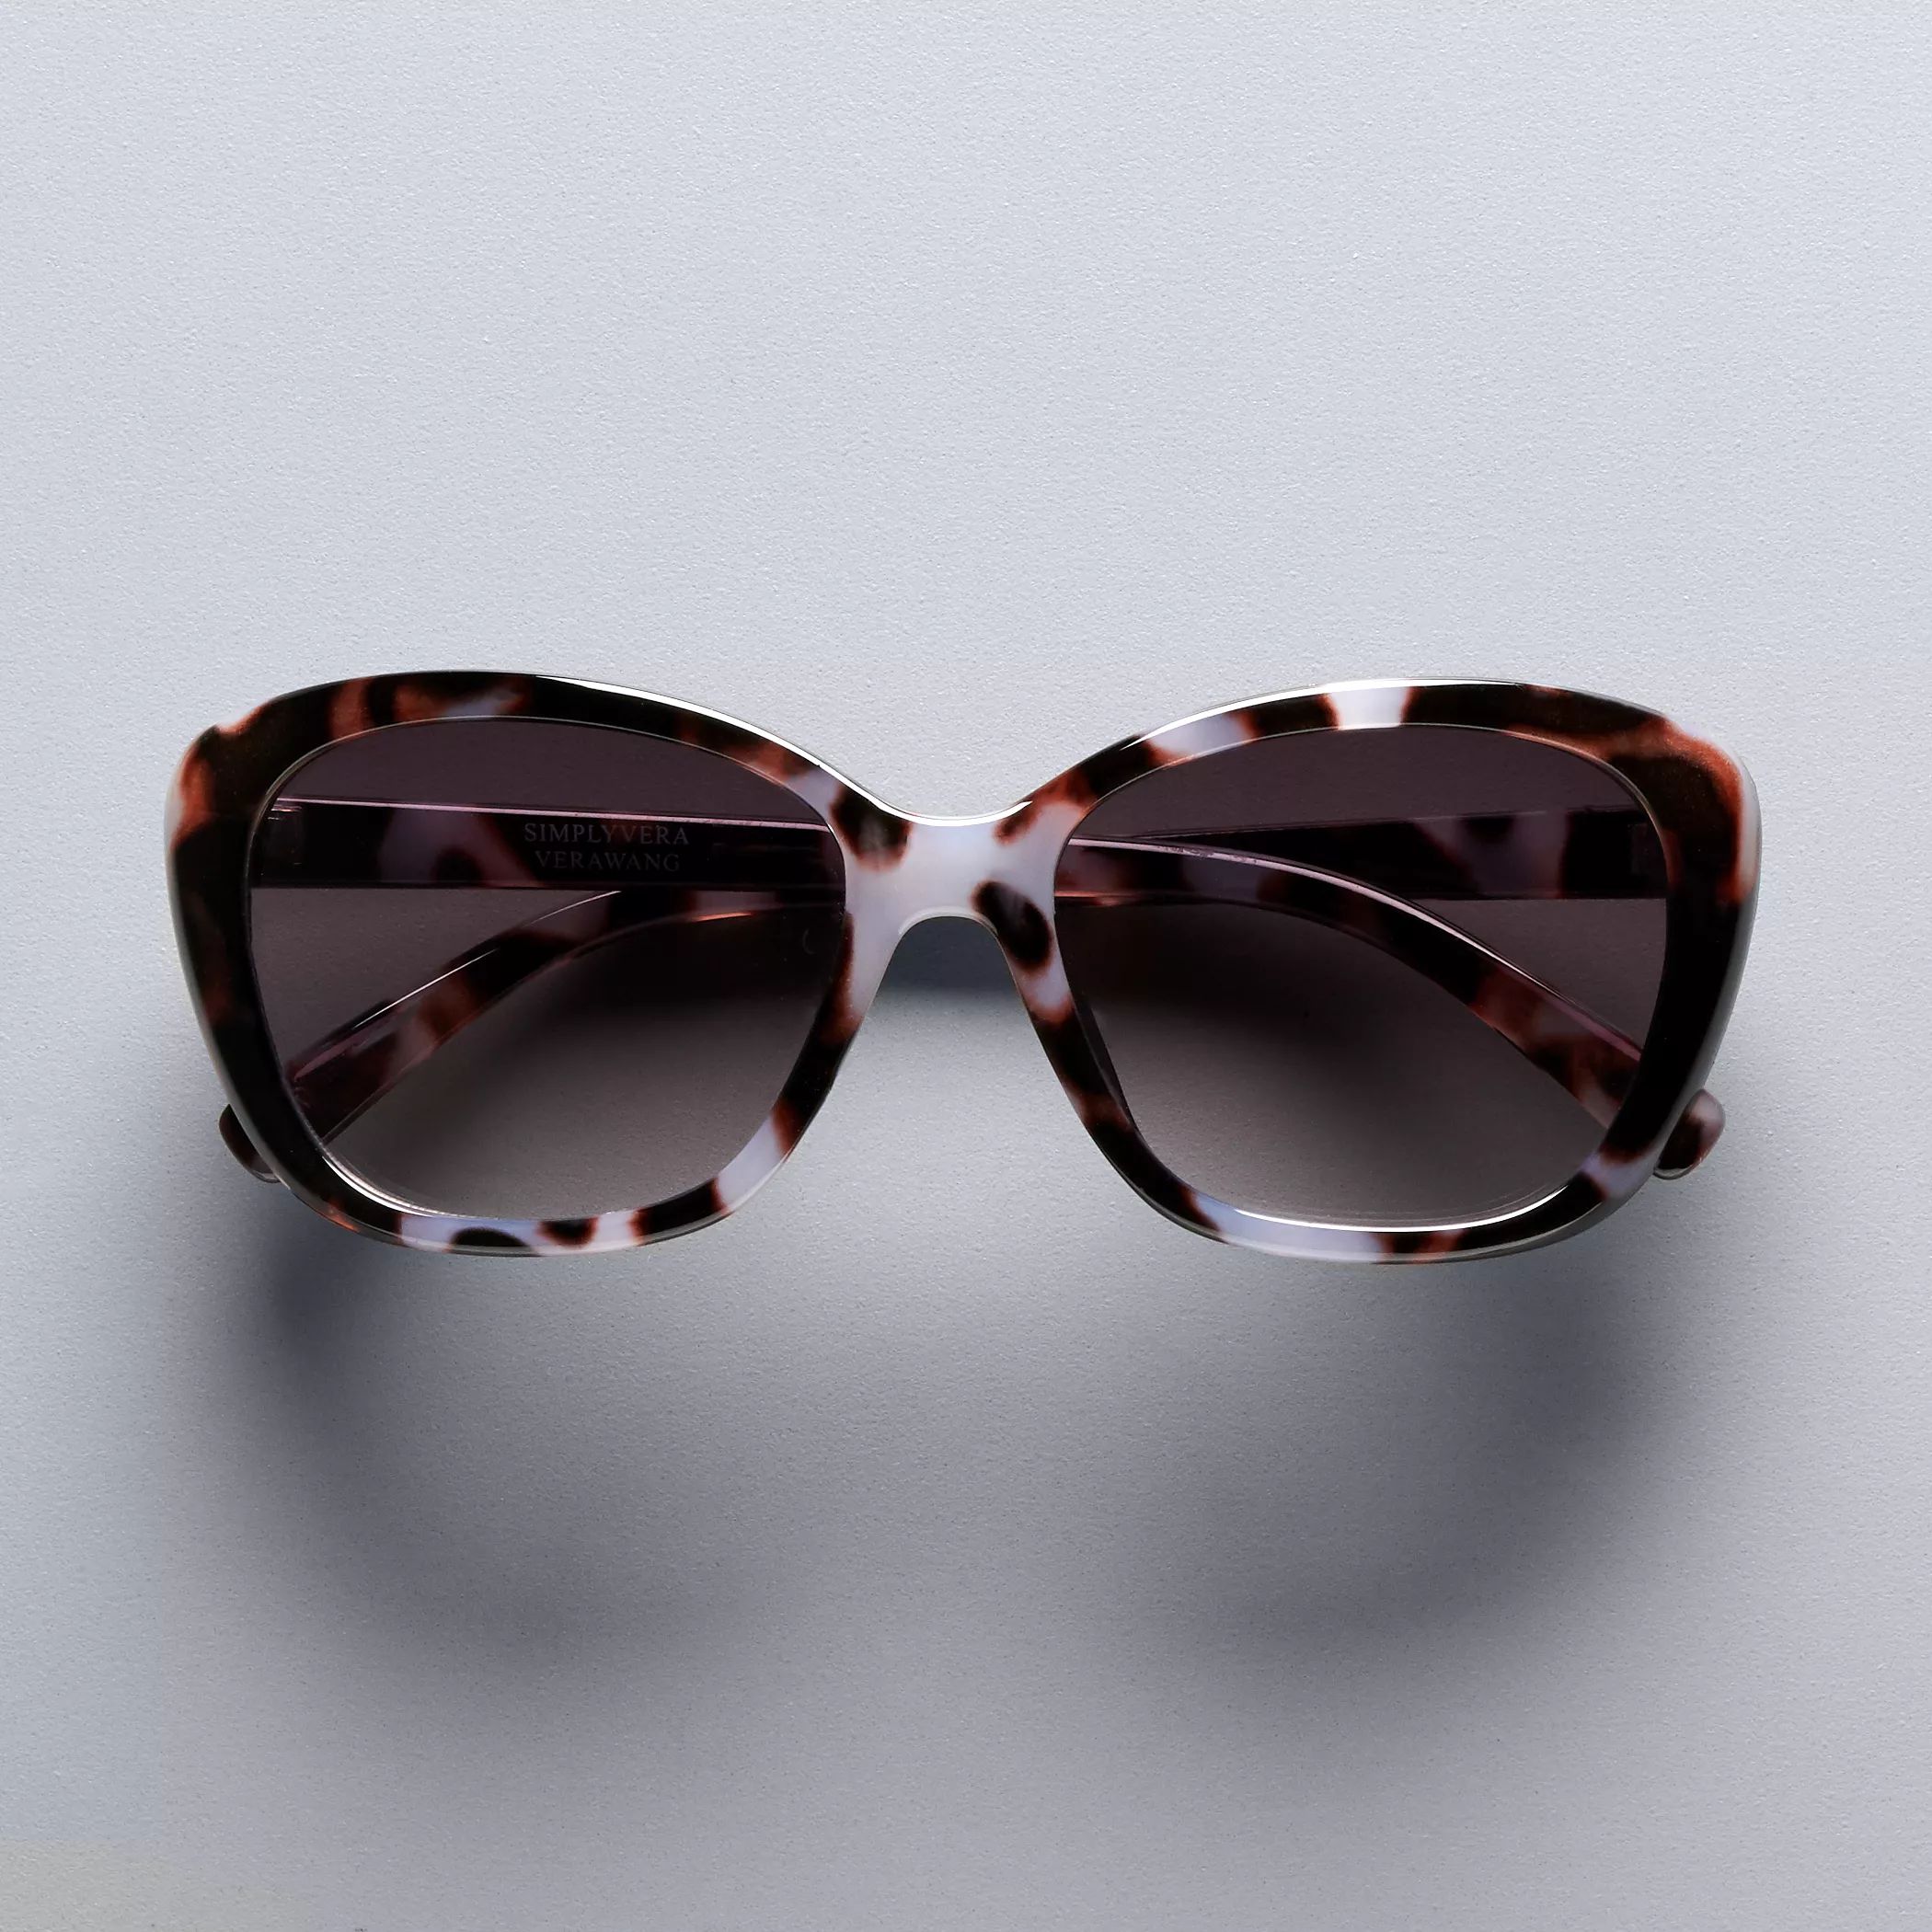 Женские солнцезащитные очки «кошачий глаз» Simply Vera Vera Wang 56 мм, рубиновые цвета Simply Vera Vera Wang wang shaoqiang display art